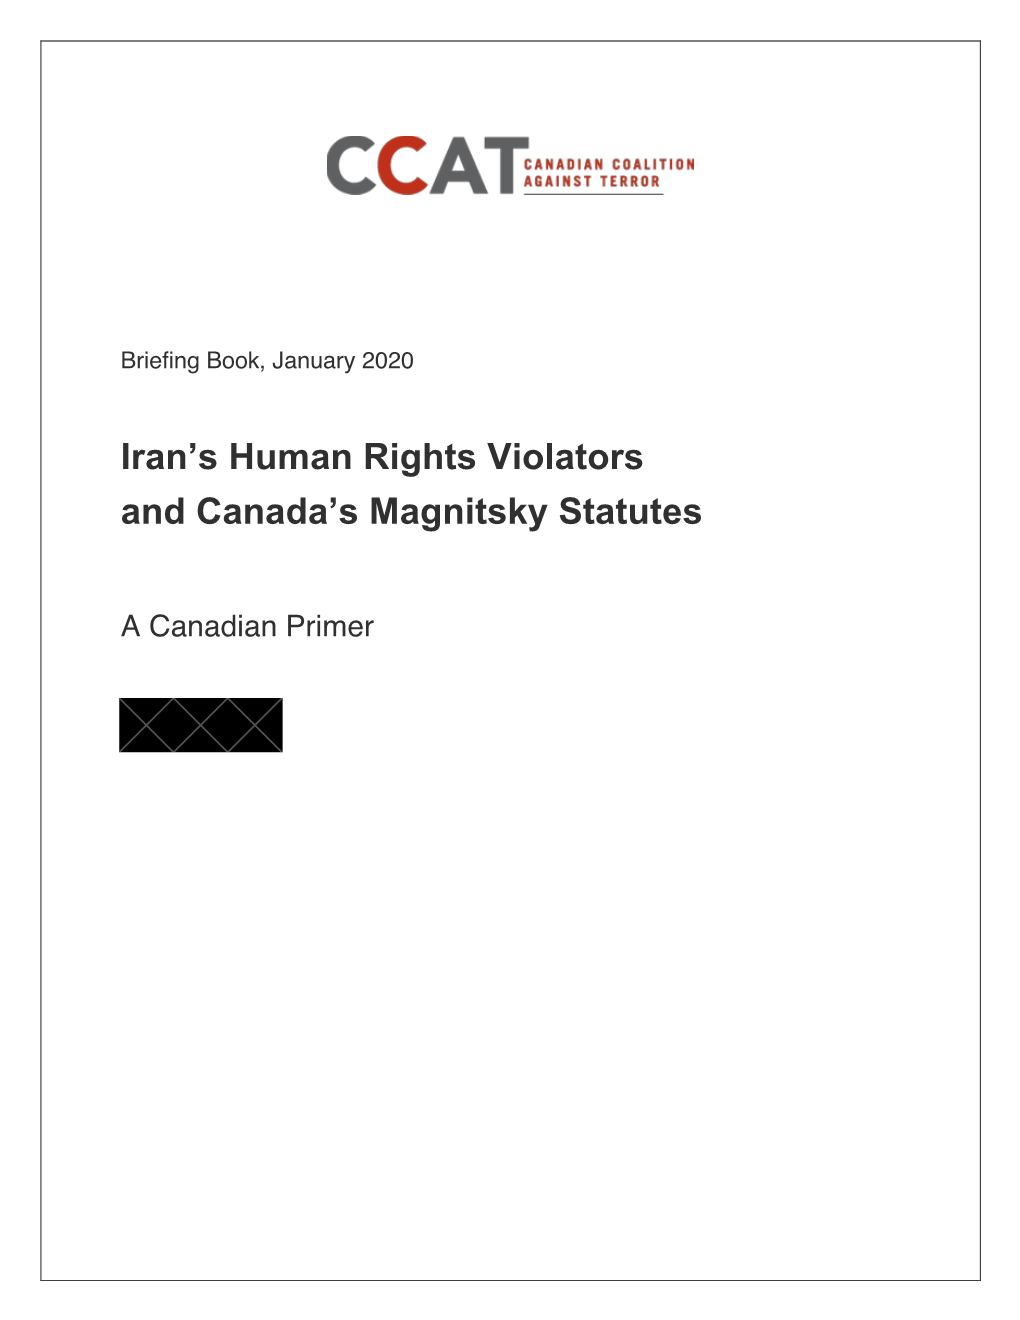 Iran's Human Rights Violators and Canada's Magnitsky Statutes